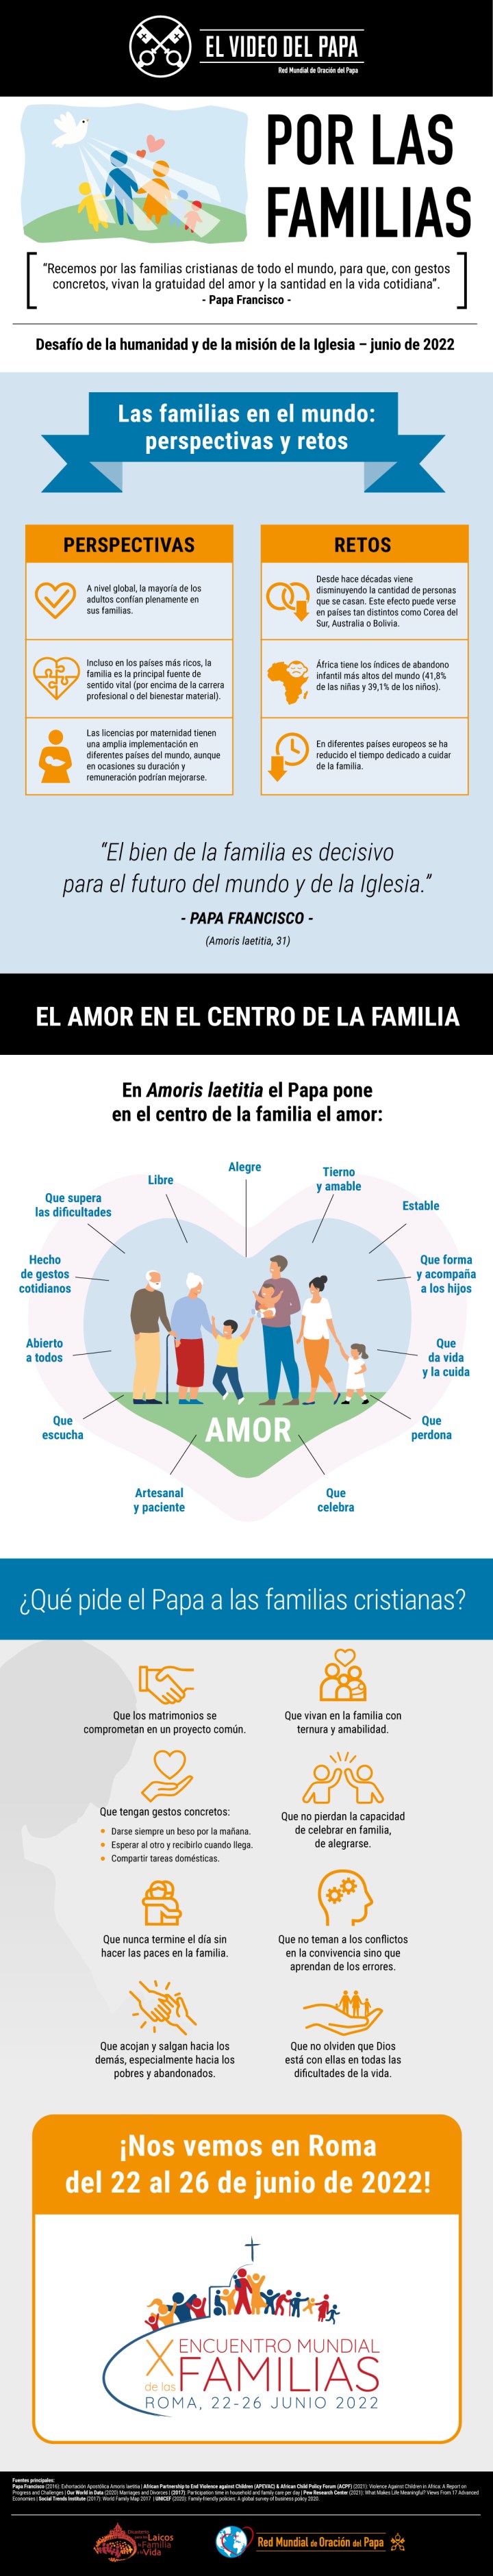 Infographic-TPV-6-2022-ES-Por-las-familias.jpg